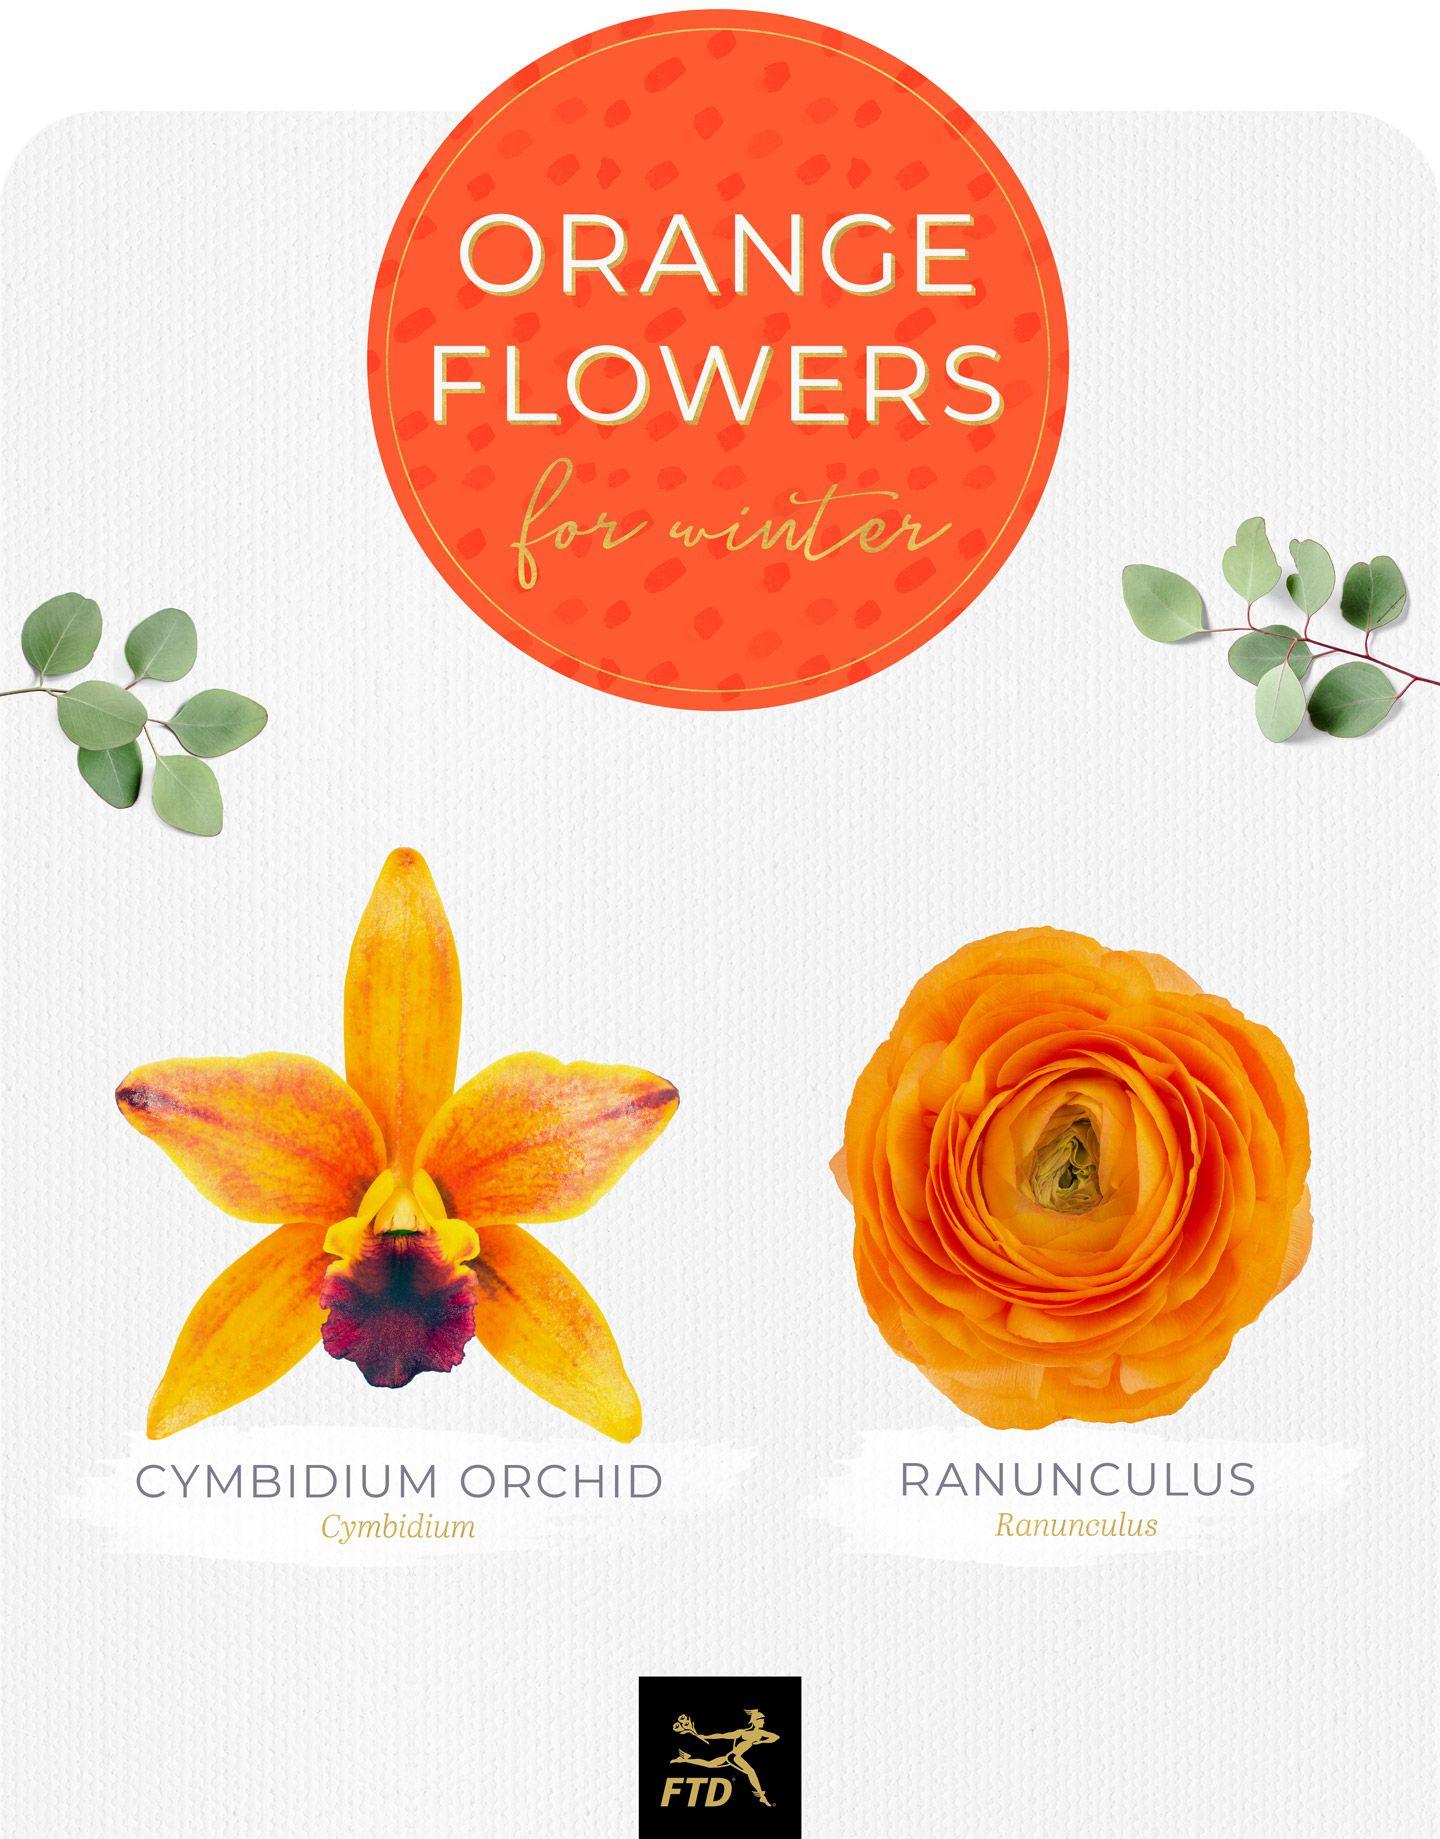 Orange Flower Logo - 20 Types of Orange Flowers - FTD.com